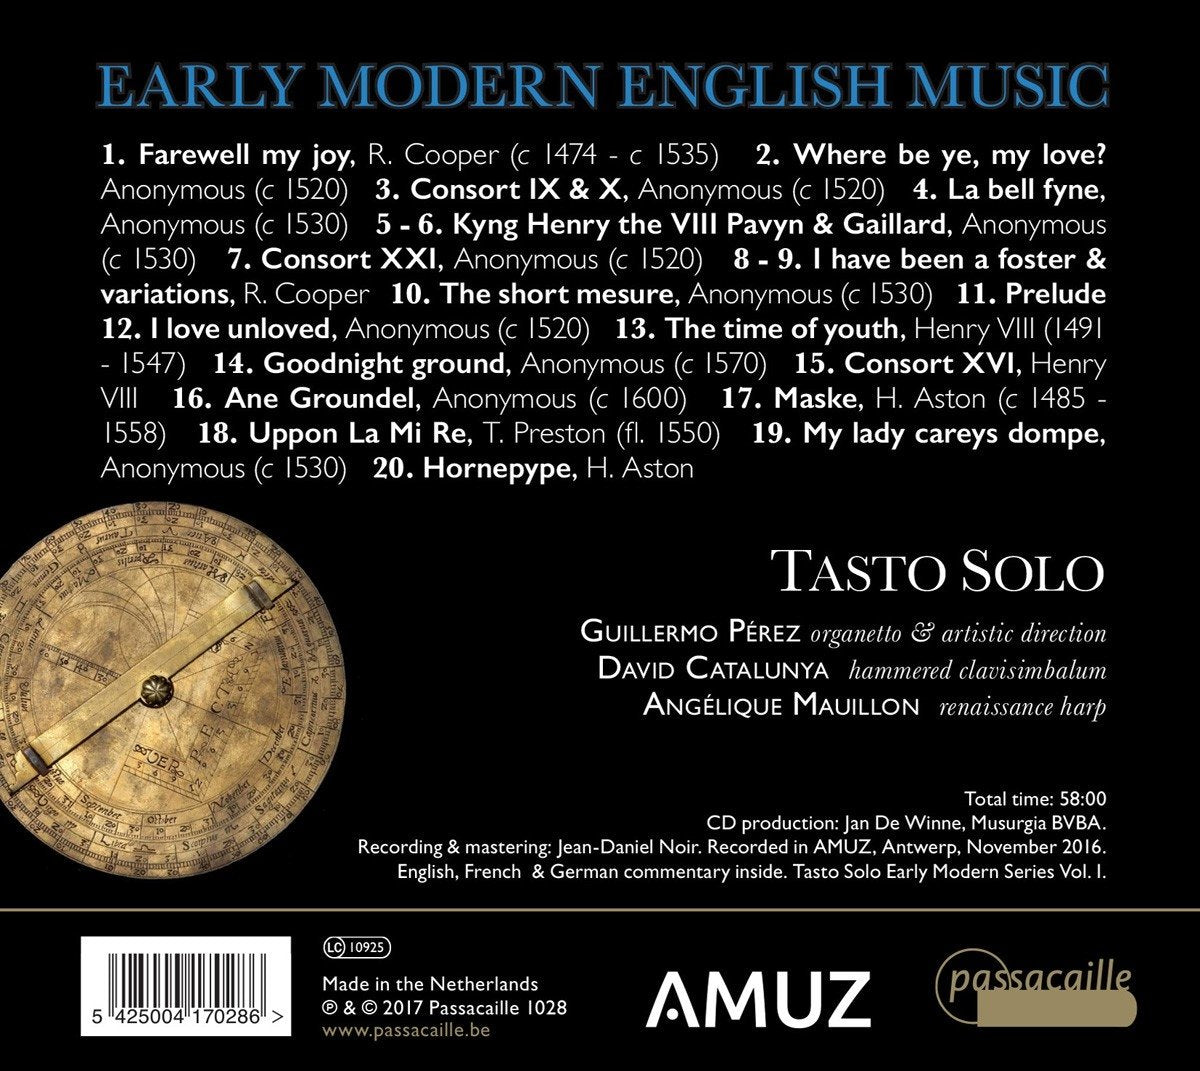 Early Modern English Music (1500-1550) - Tasto Solo